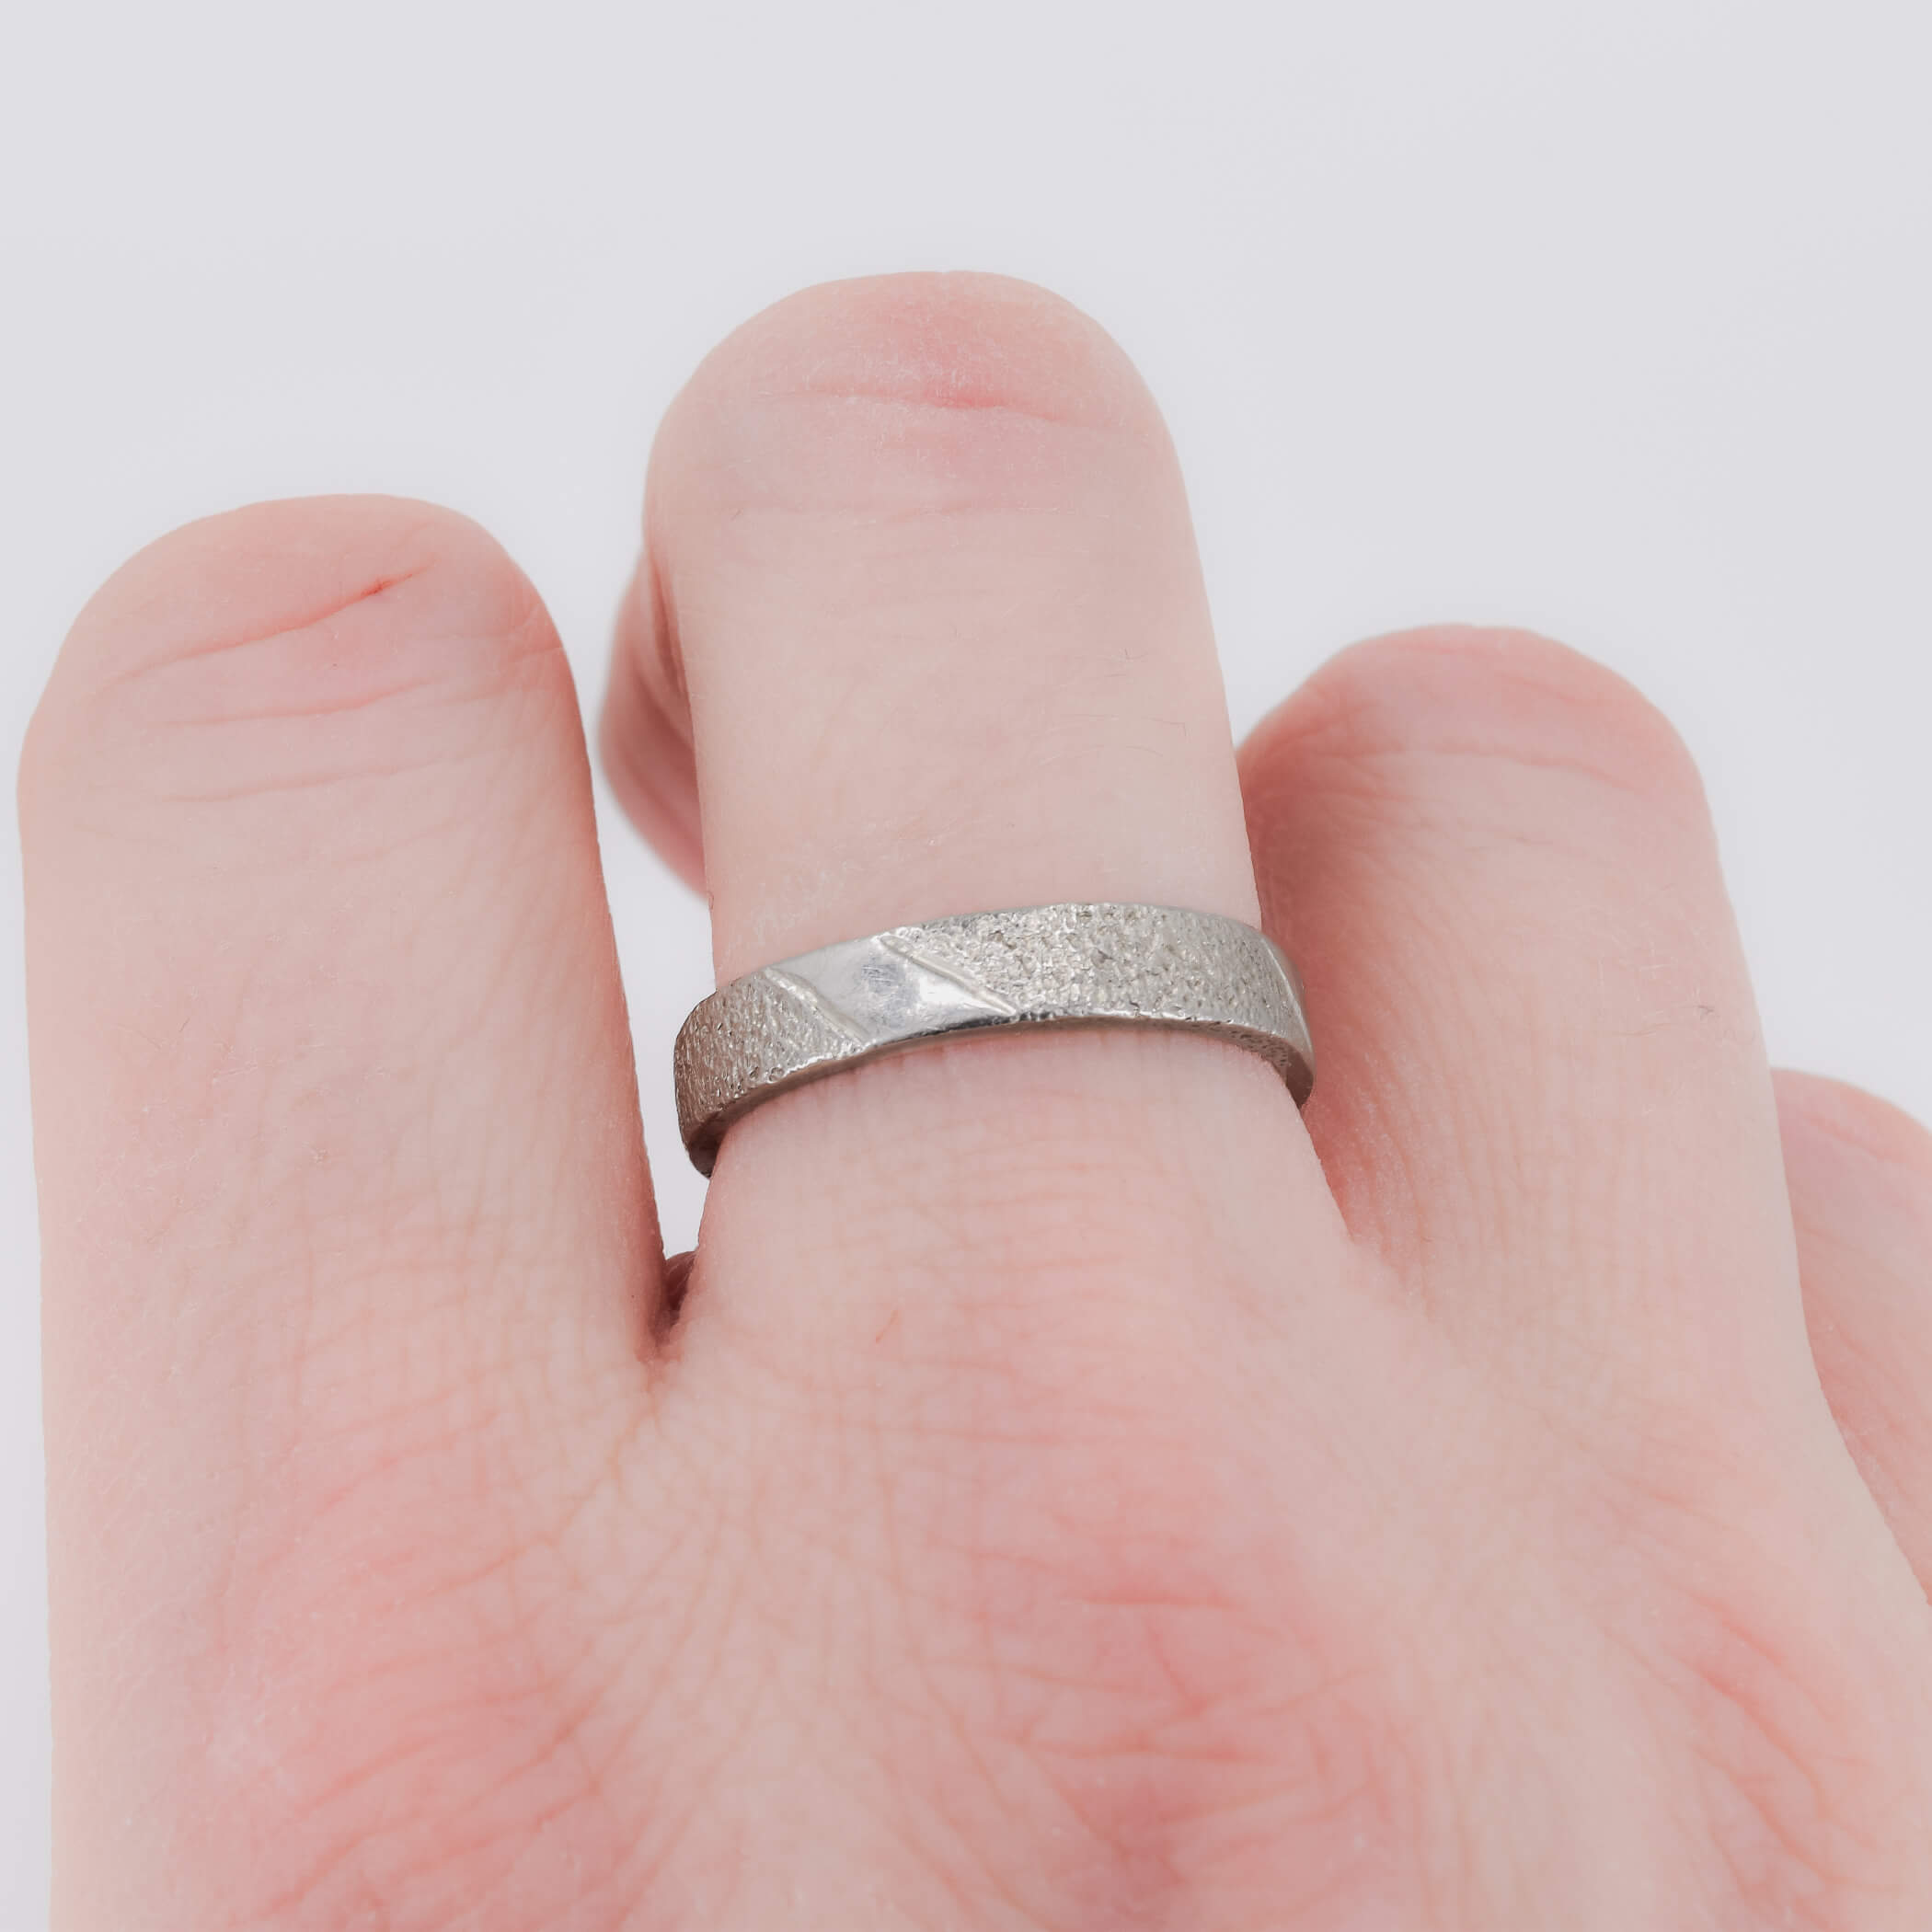 Stardust 4mm sterling silver ring worn